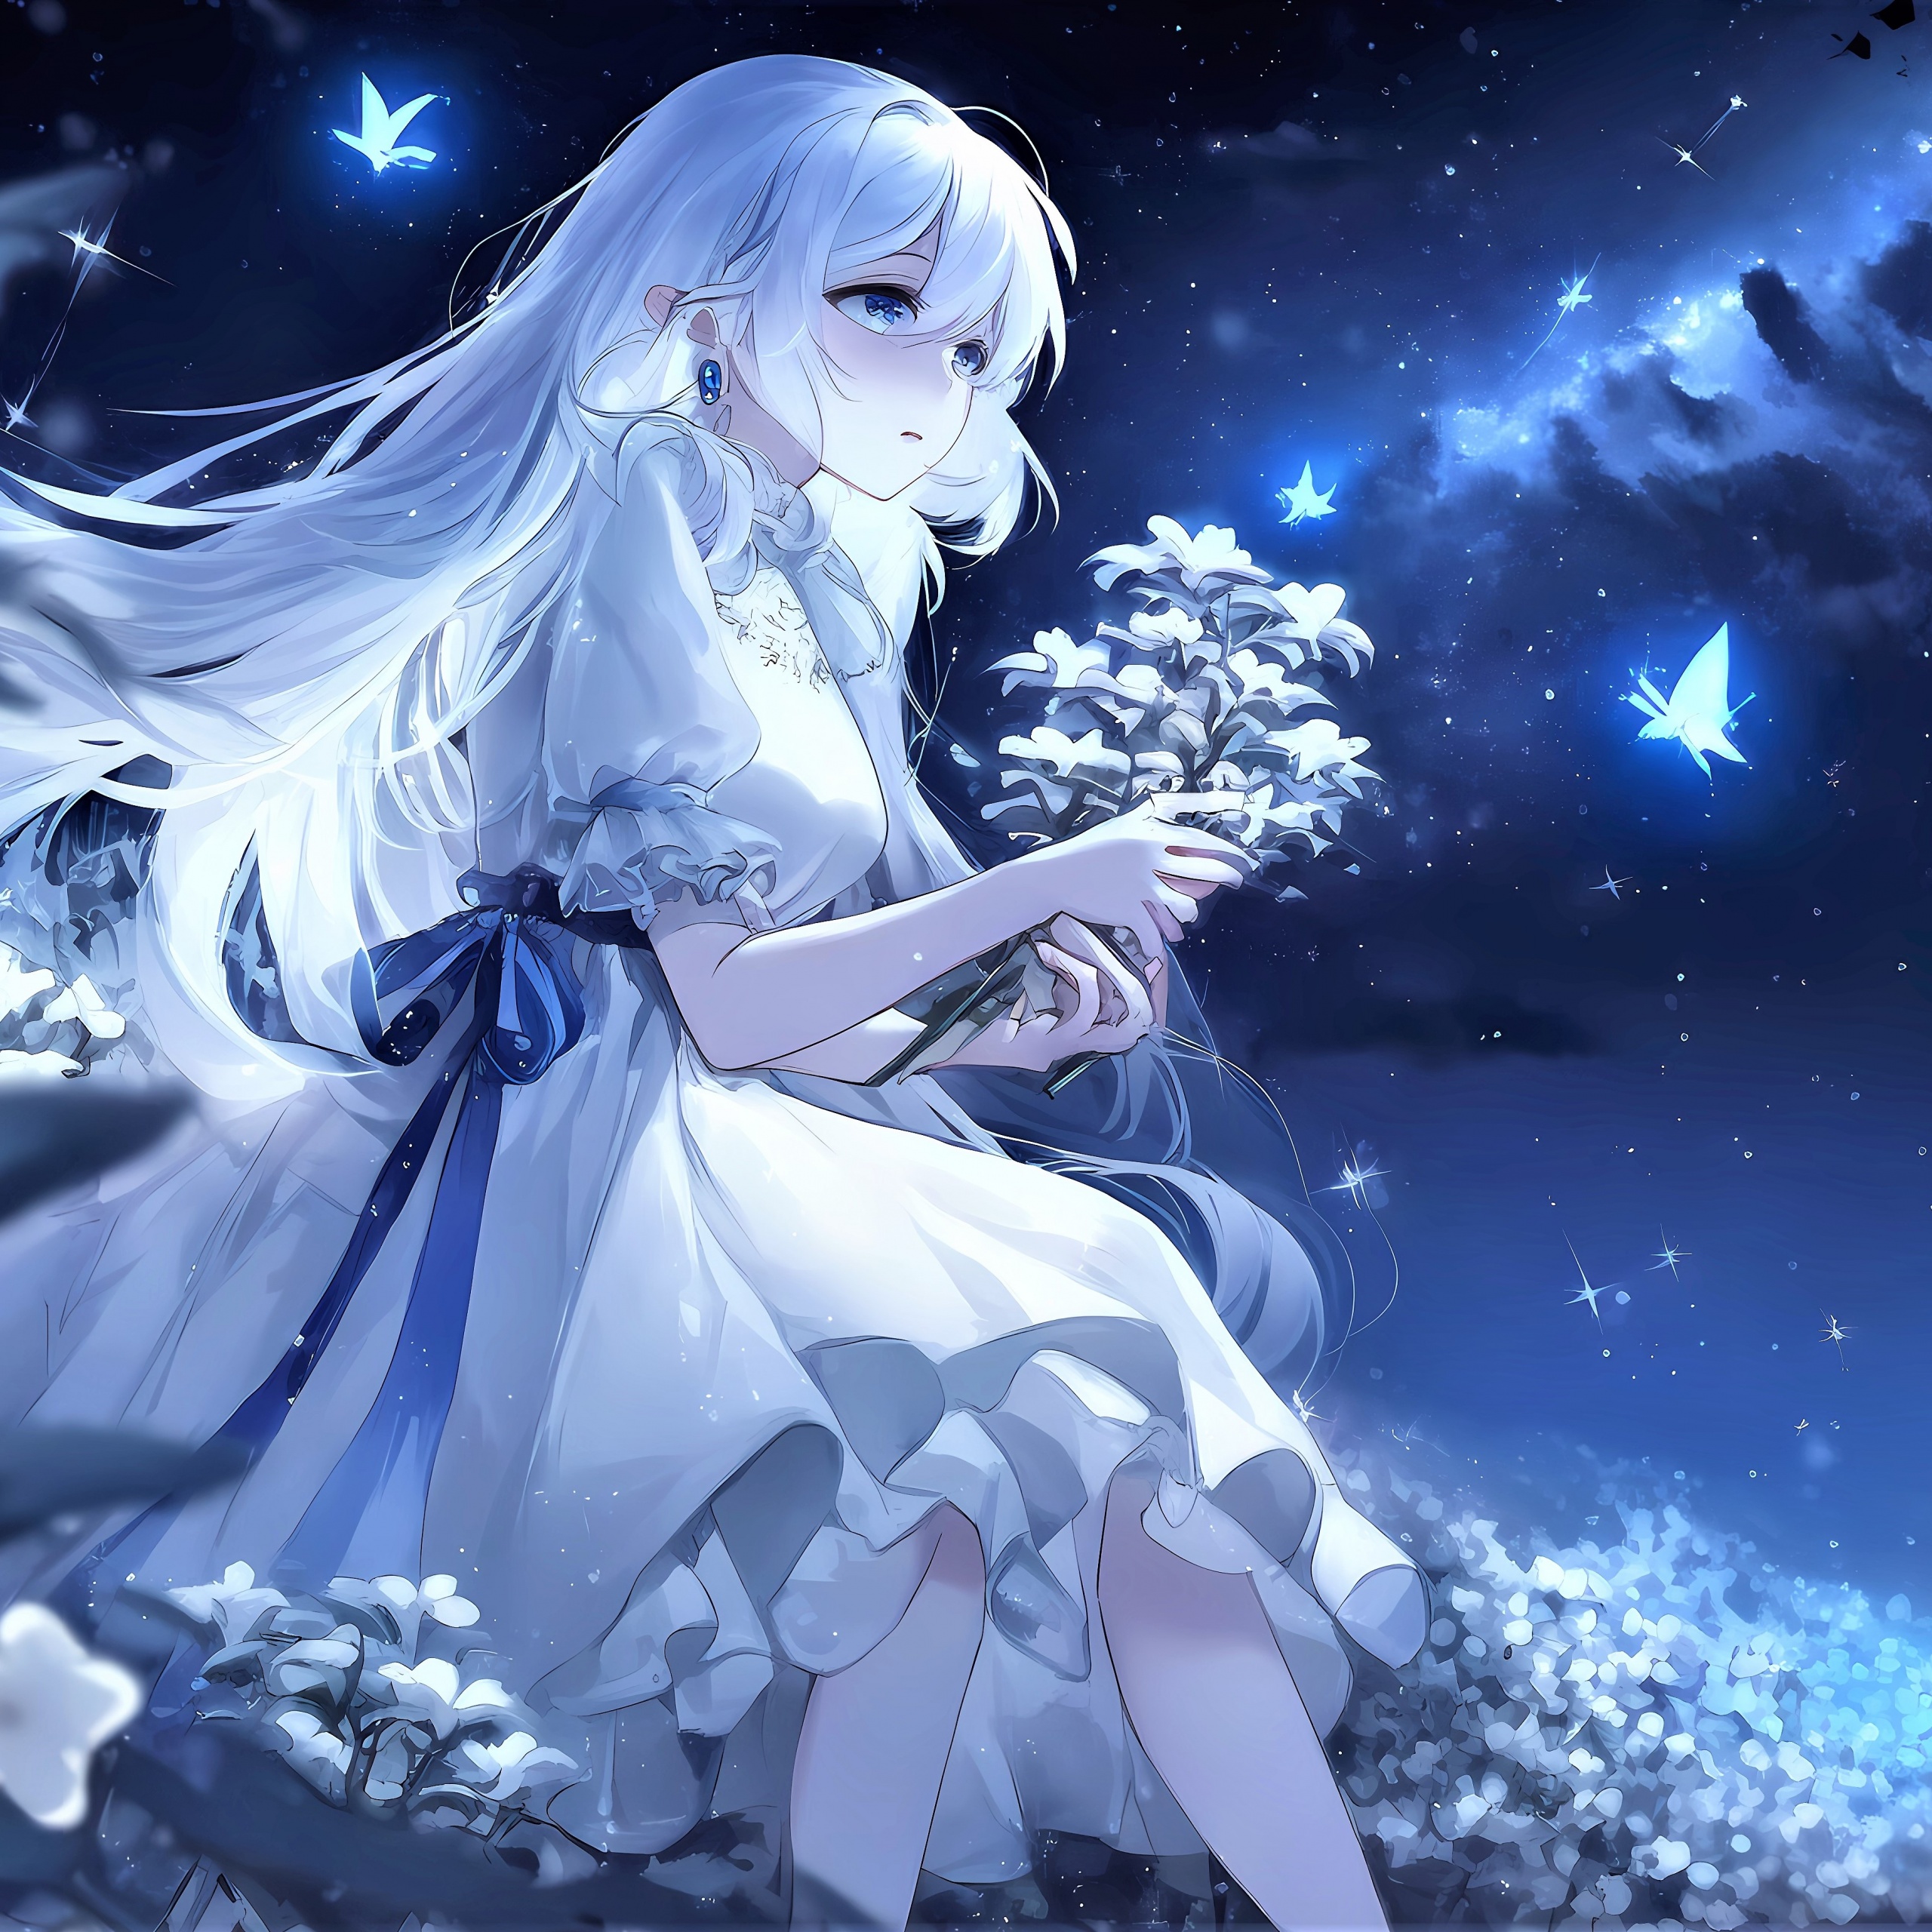 Moon  Other  Anime Background Wallpapers on Desktop Nexus Image 1117688